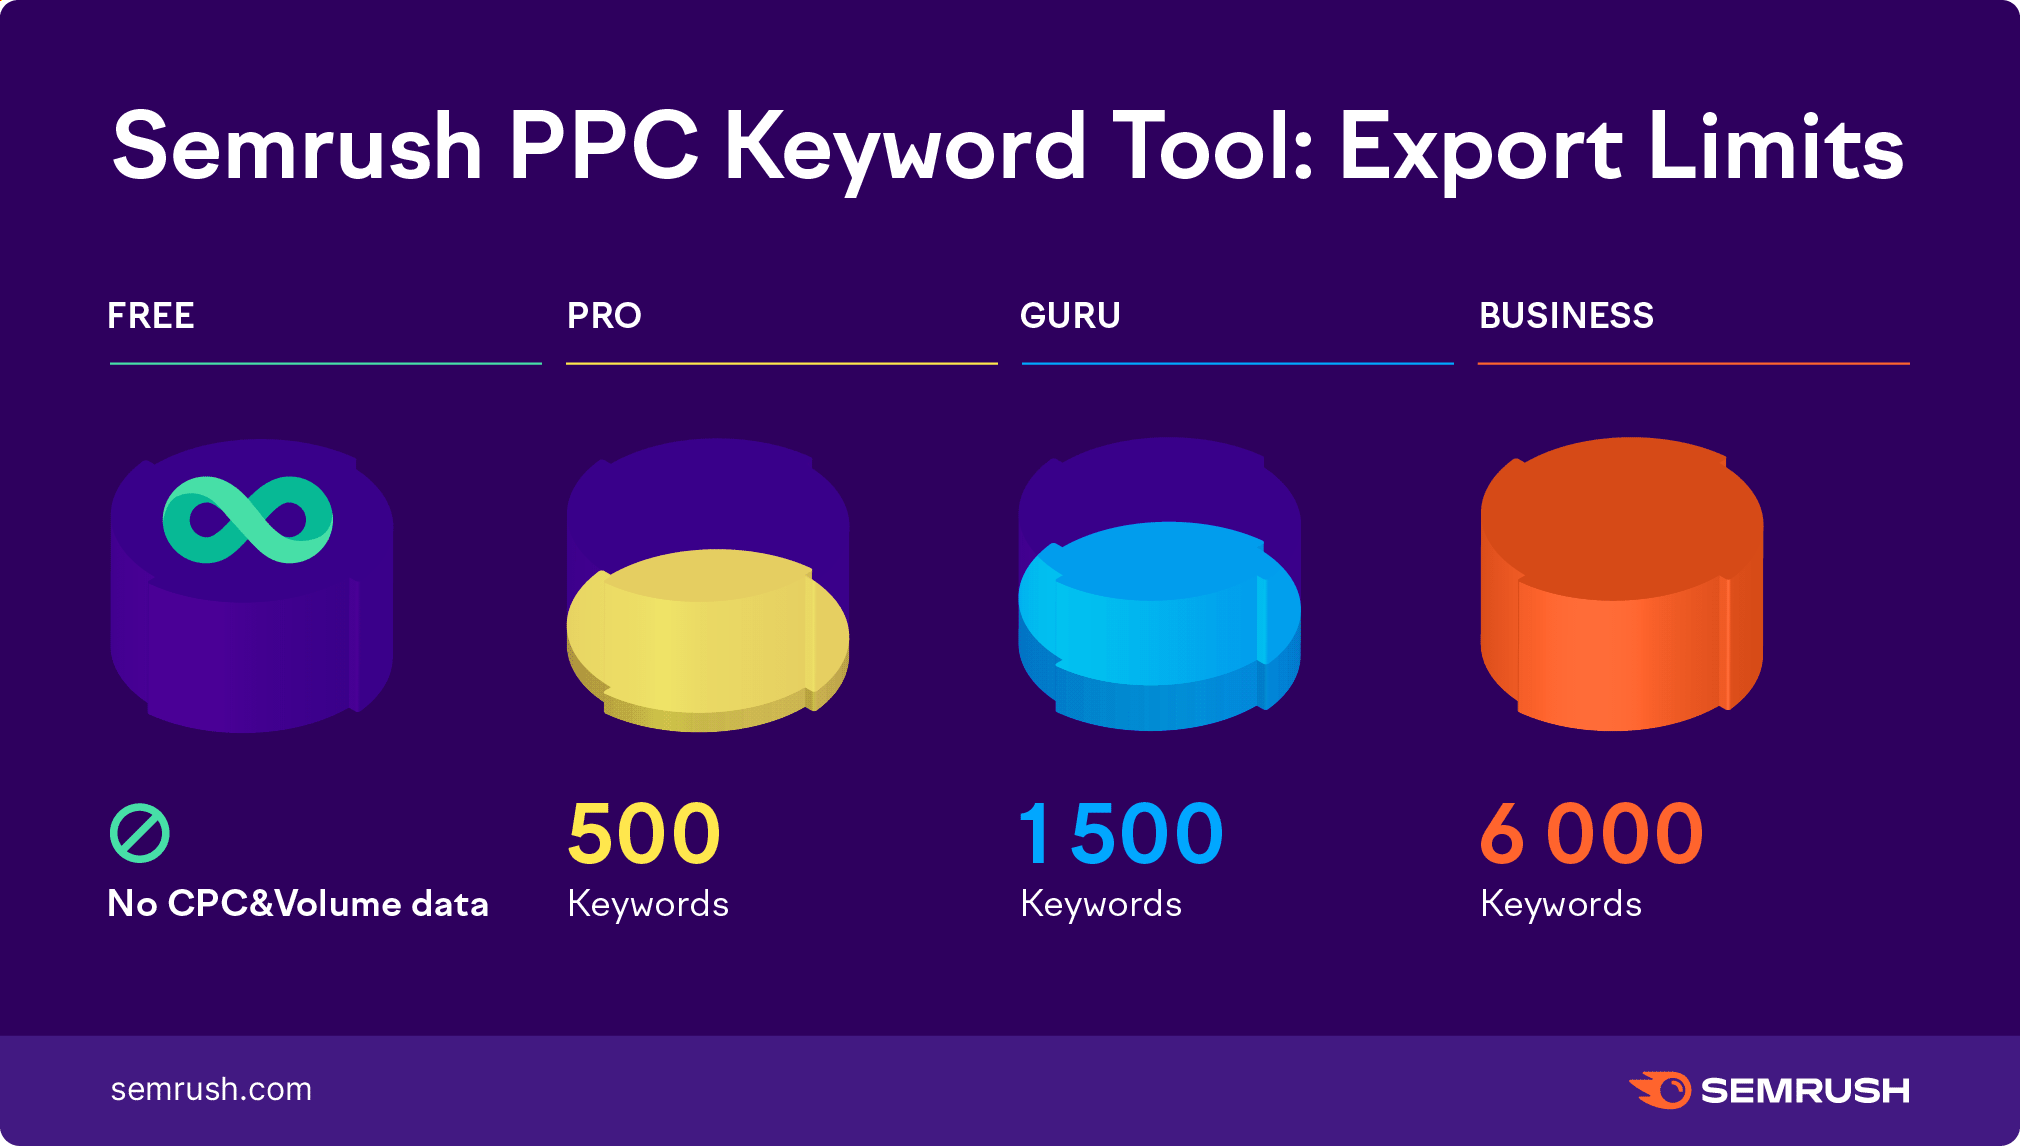 Semrush PPC Keyword Tool: export limits. Free plan: No CPC or volume data. Pro plan: 500 keywords with CPC and volume data. Guru plan: 1500 keywords with CPC and volume data. Business plan: 6000 keywords with CPC and volume data. 